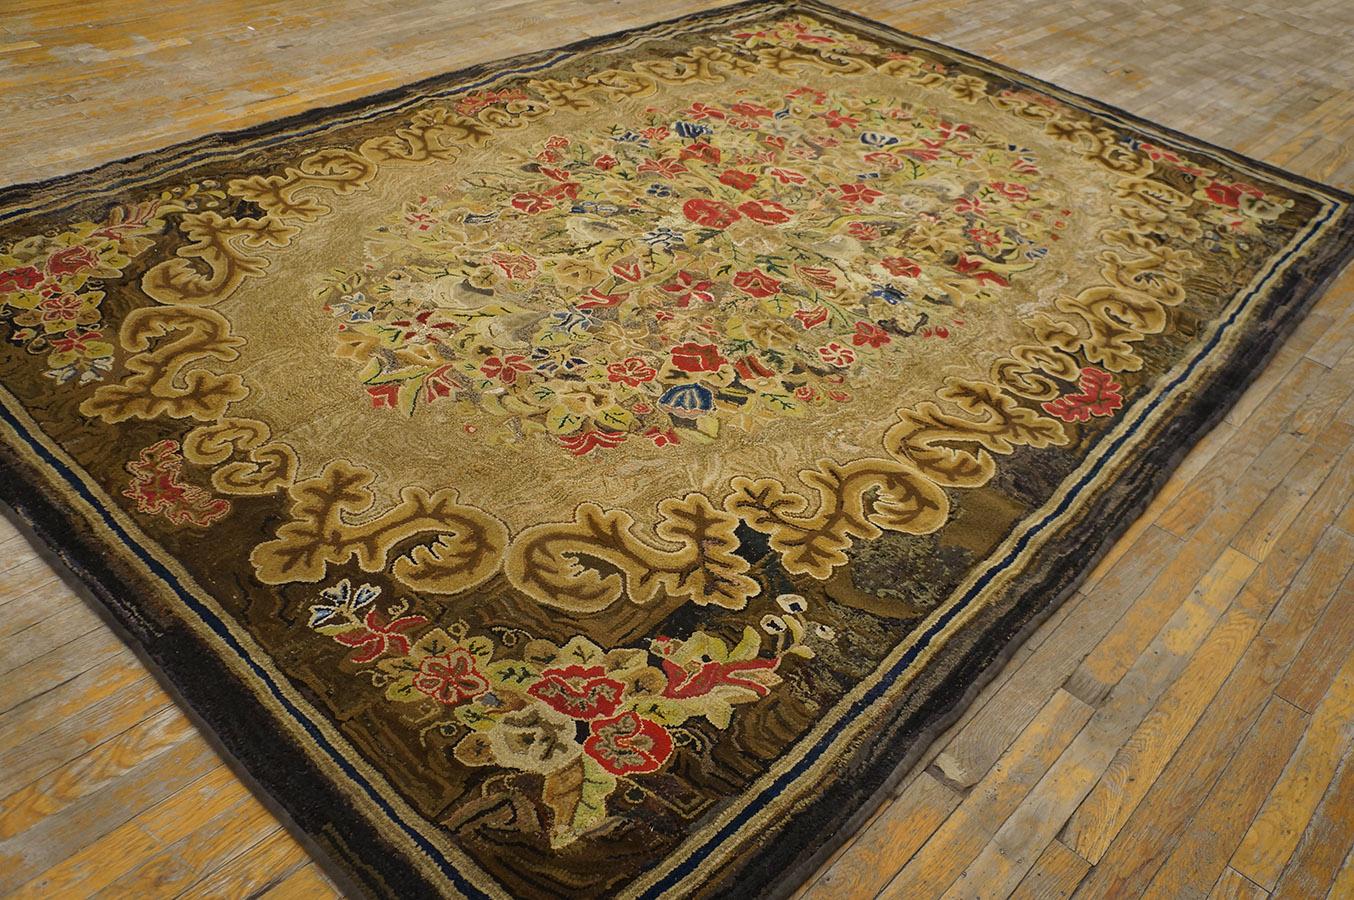 Antique American rug, measures: 6'10